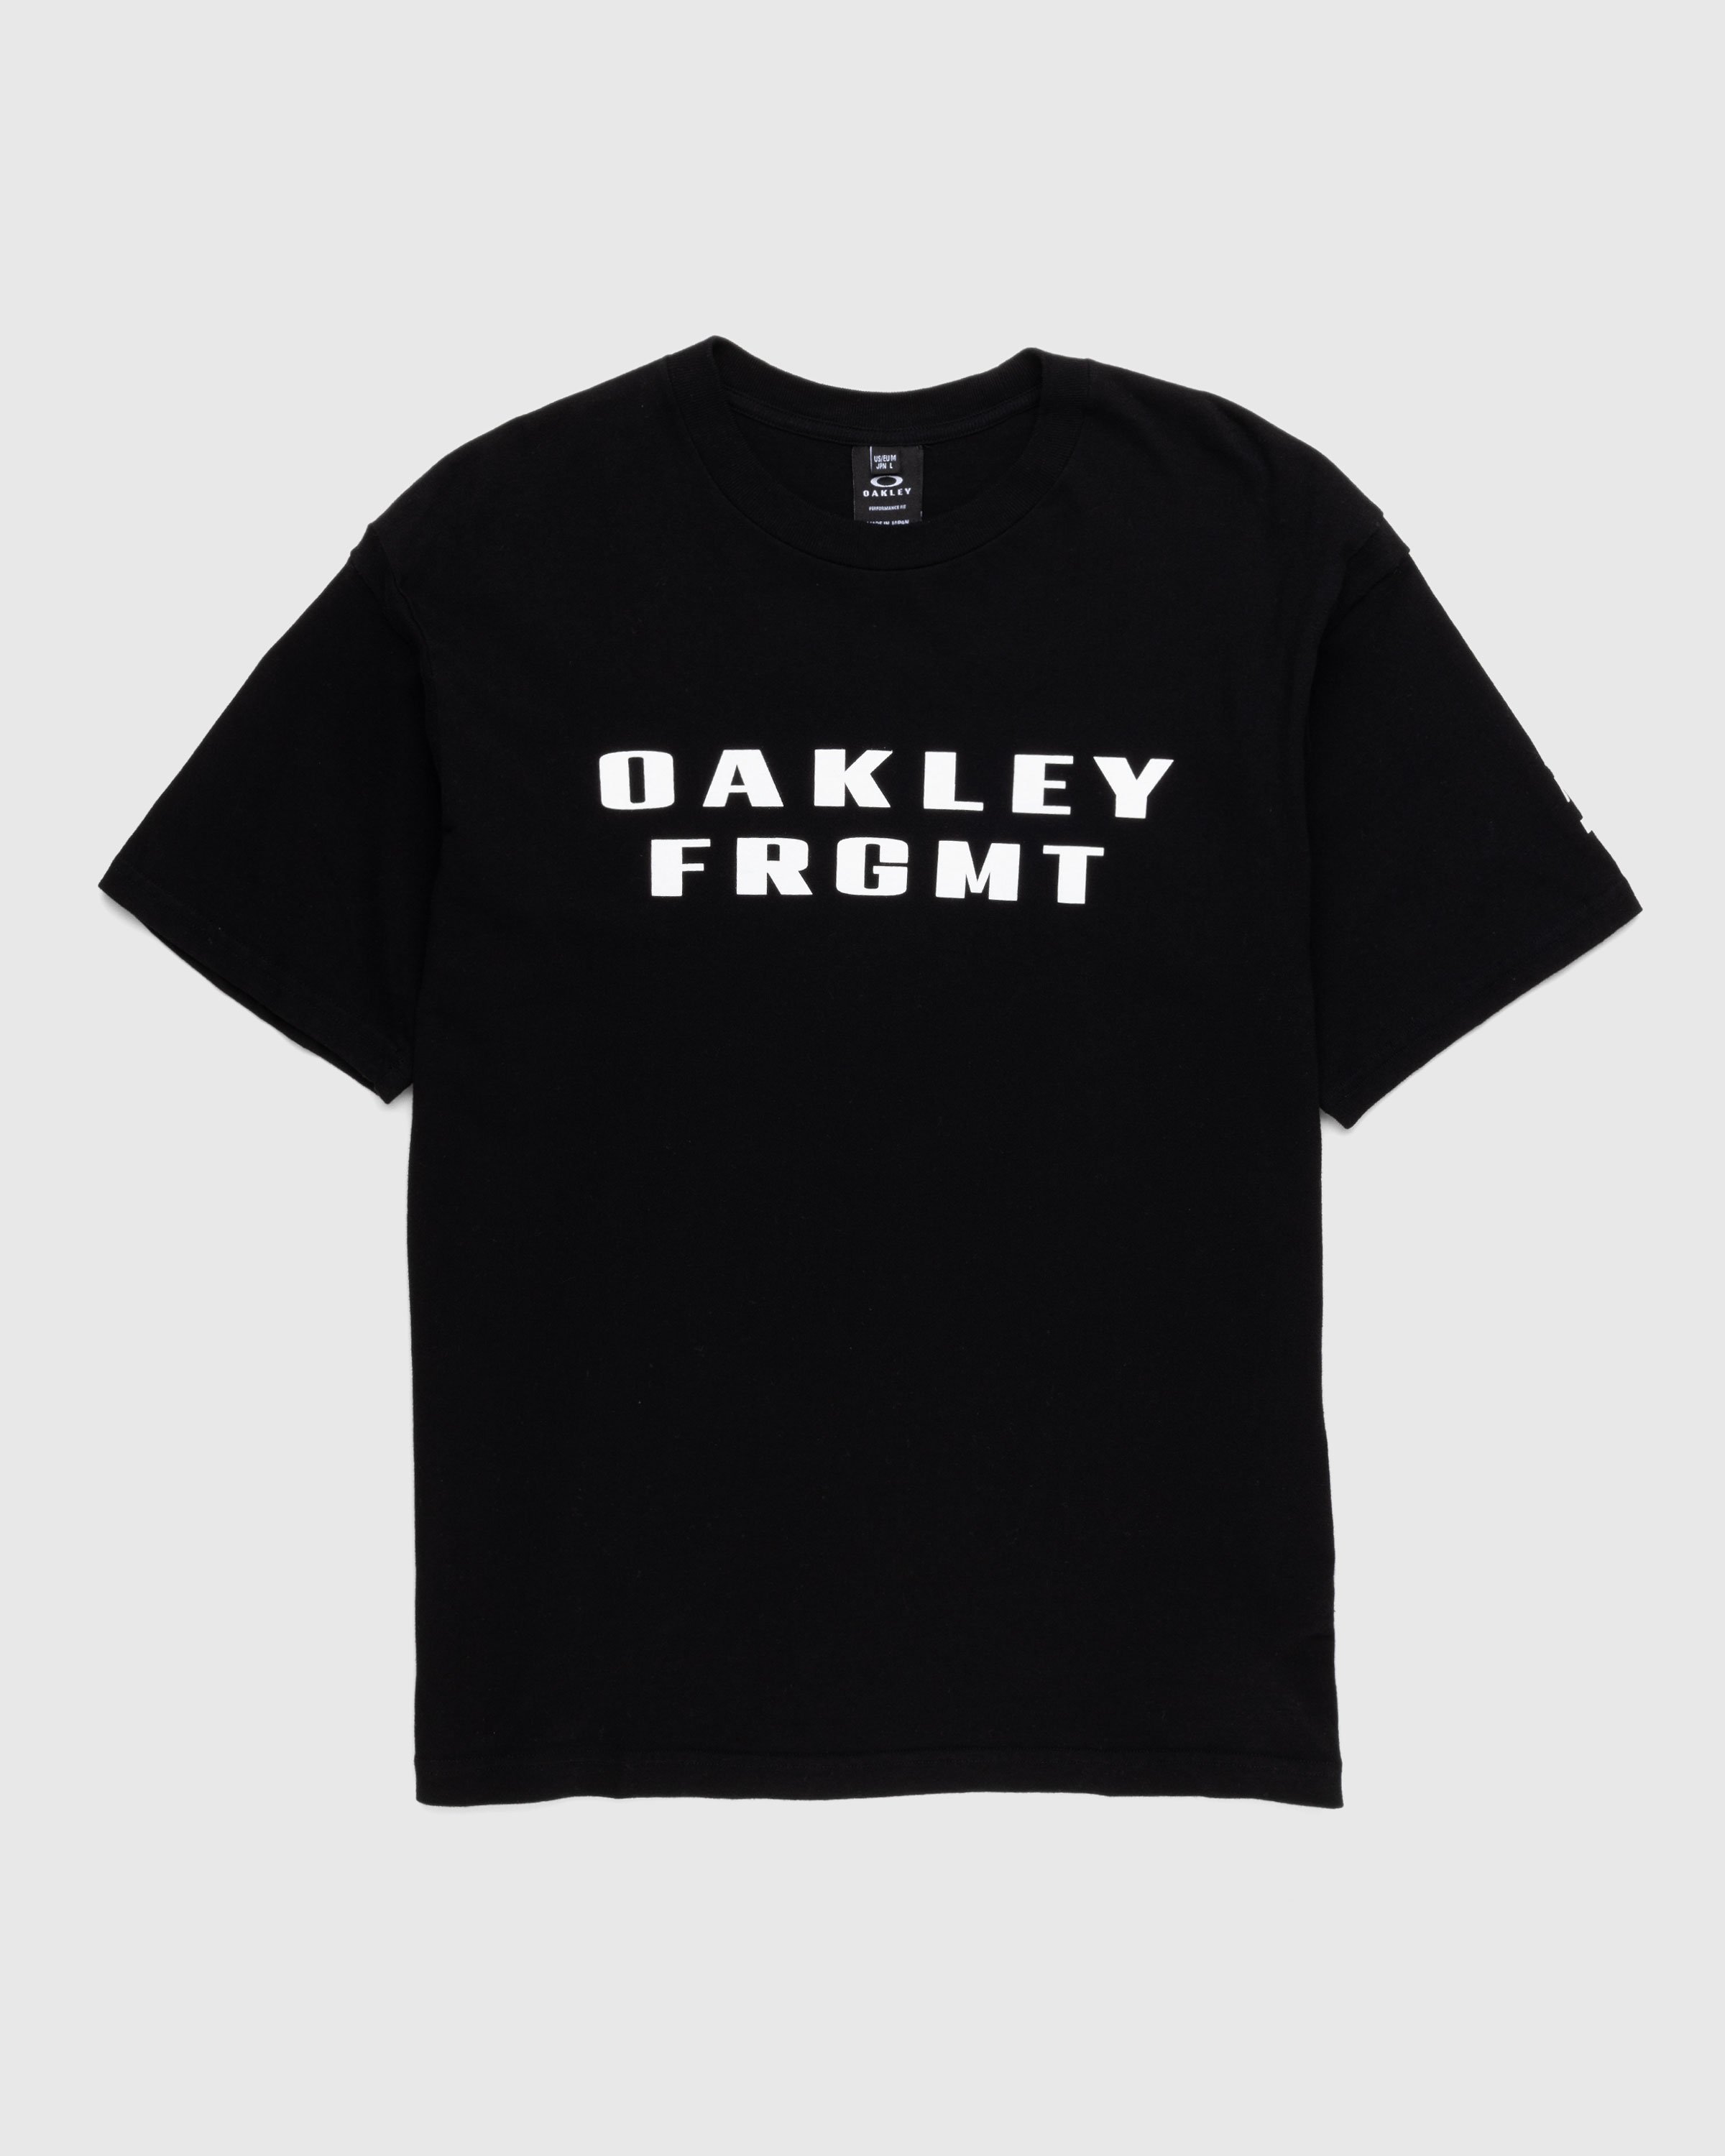 Oakley x Fragment - T-Shirt Blackout - Clothing - Black - Image 1